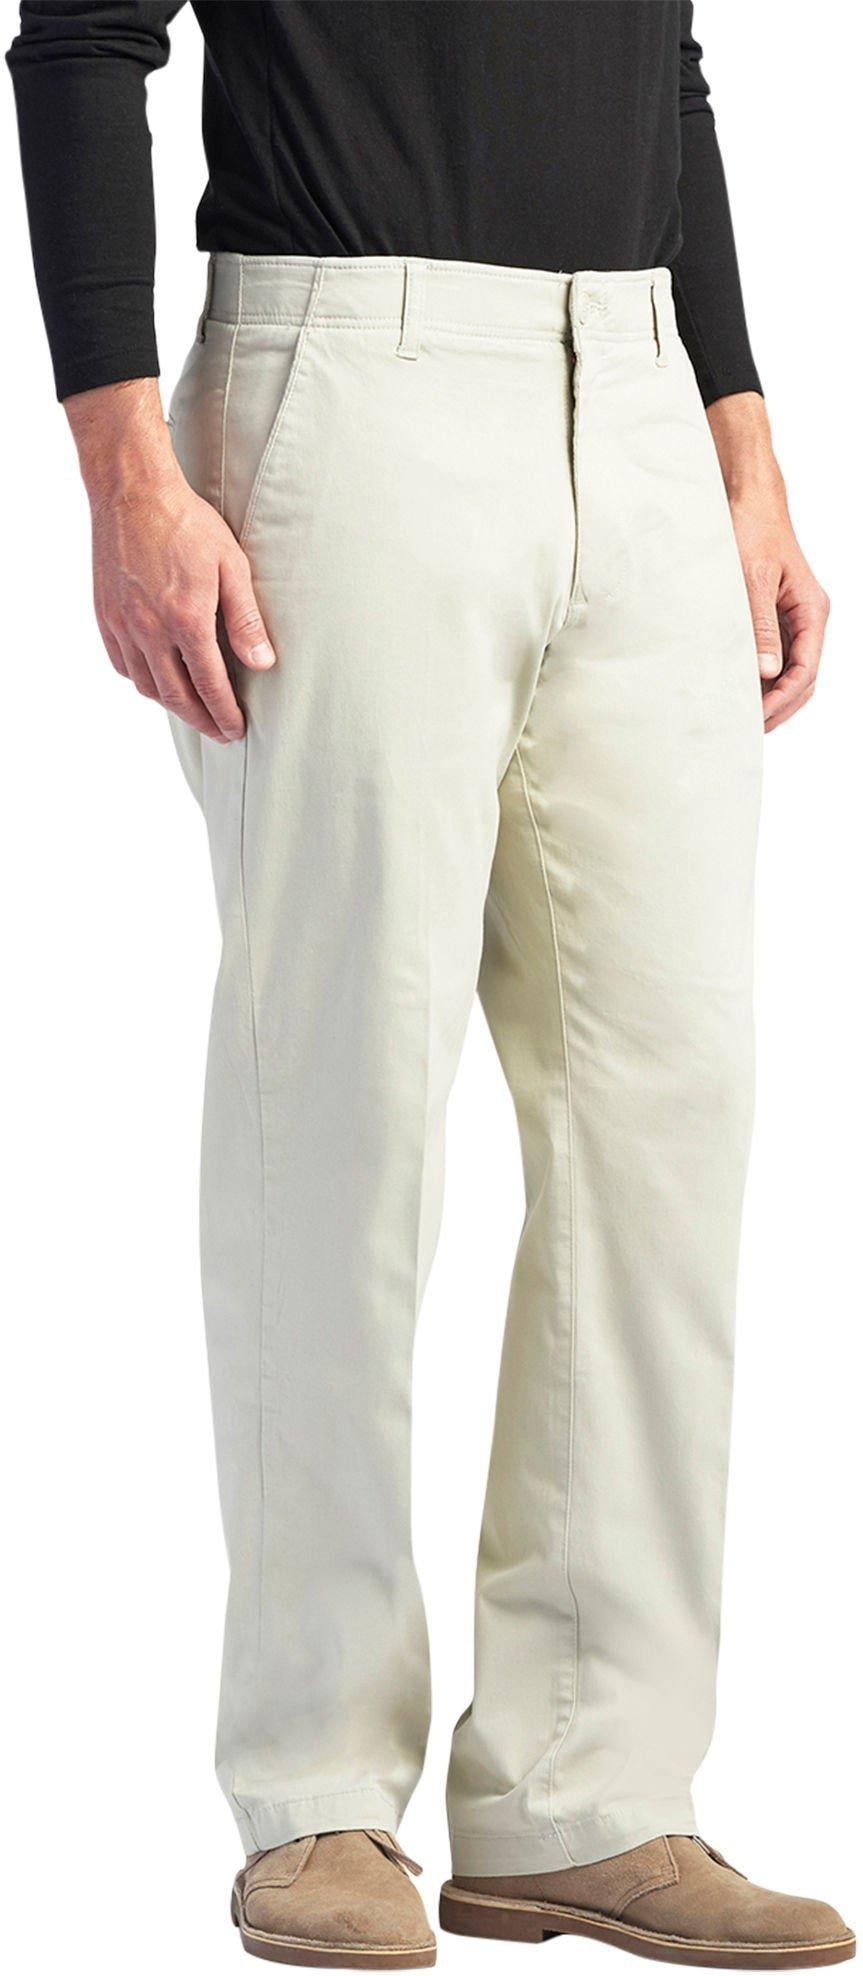 Lee Mens Big & Tall Xtreme Comfort Chino Pants - Walmart.com